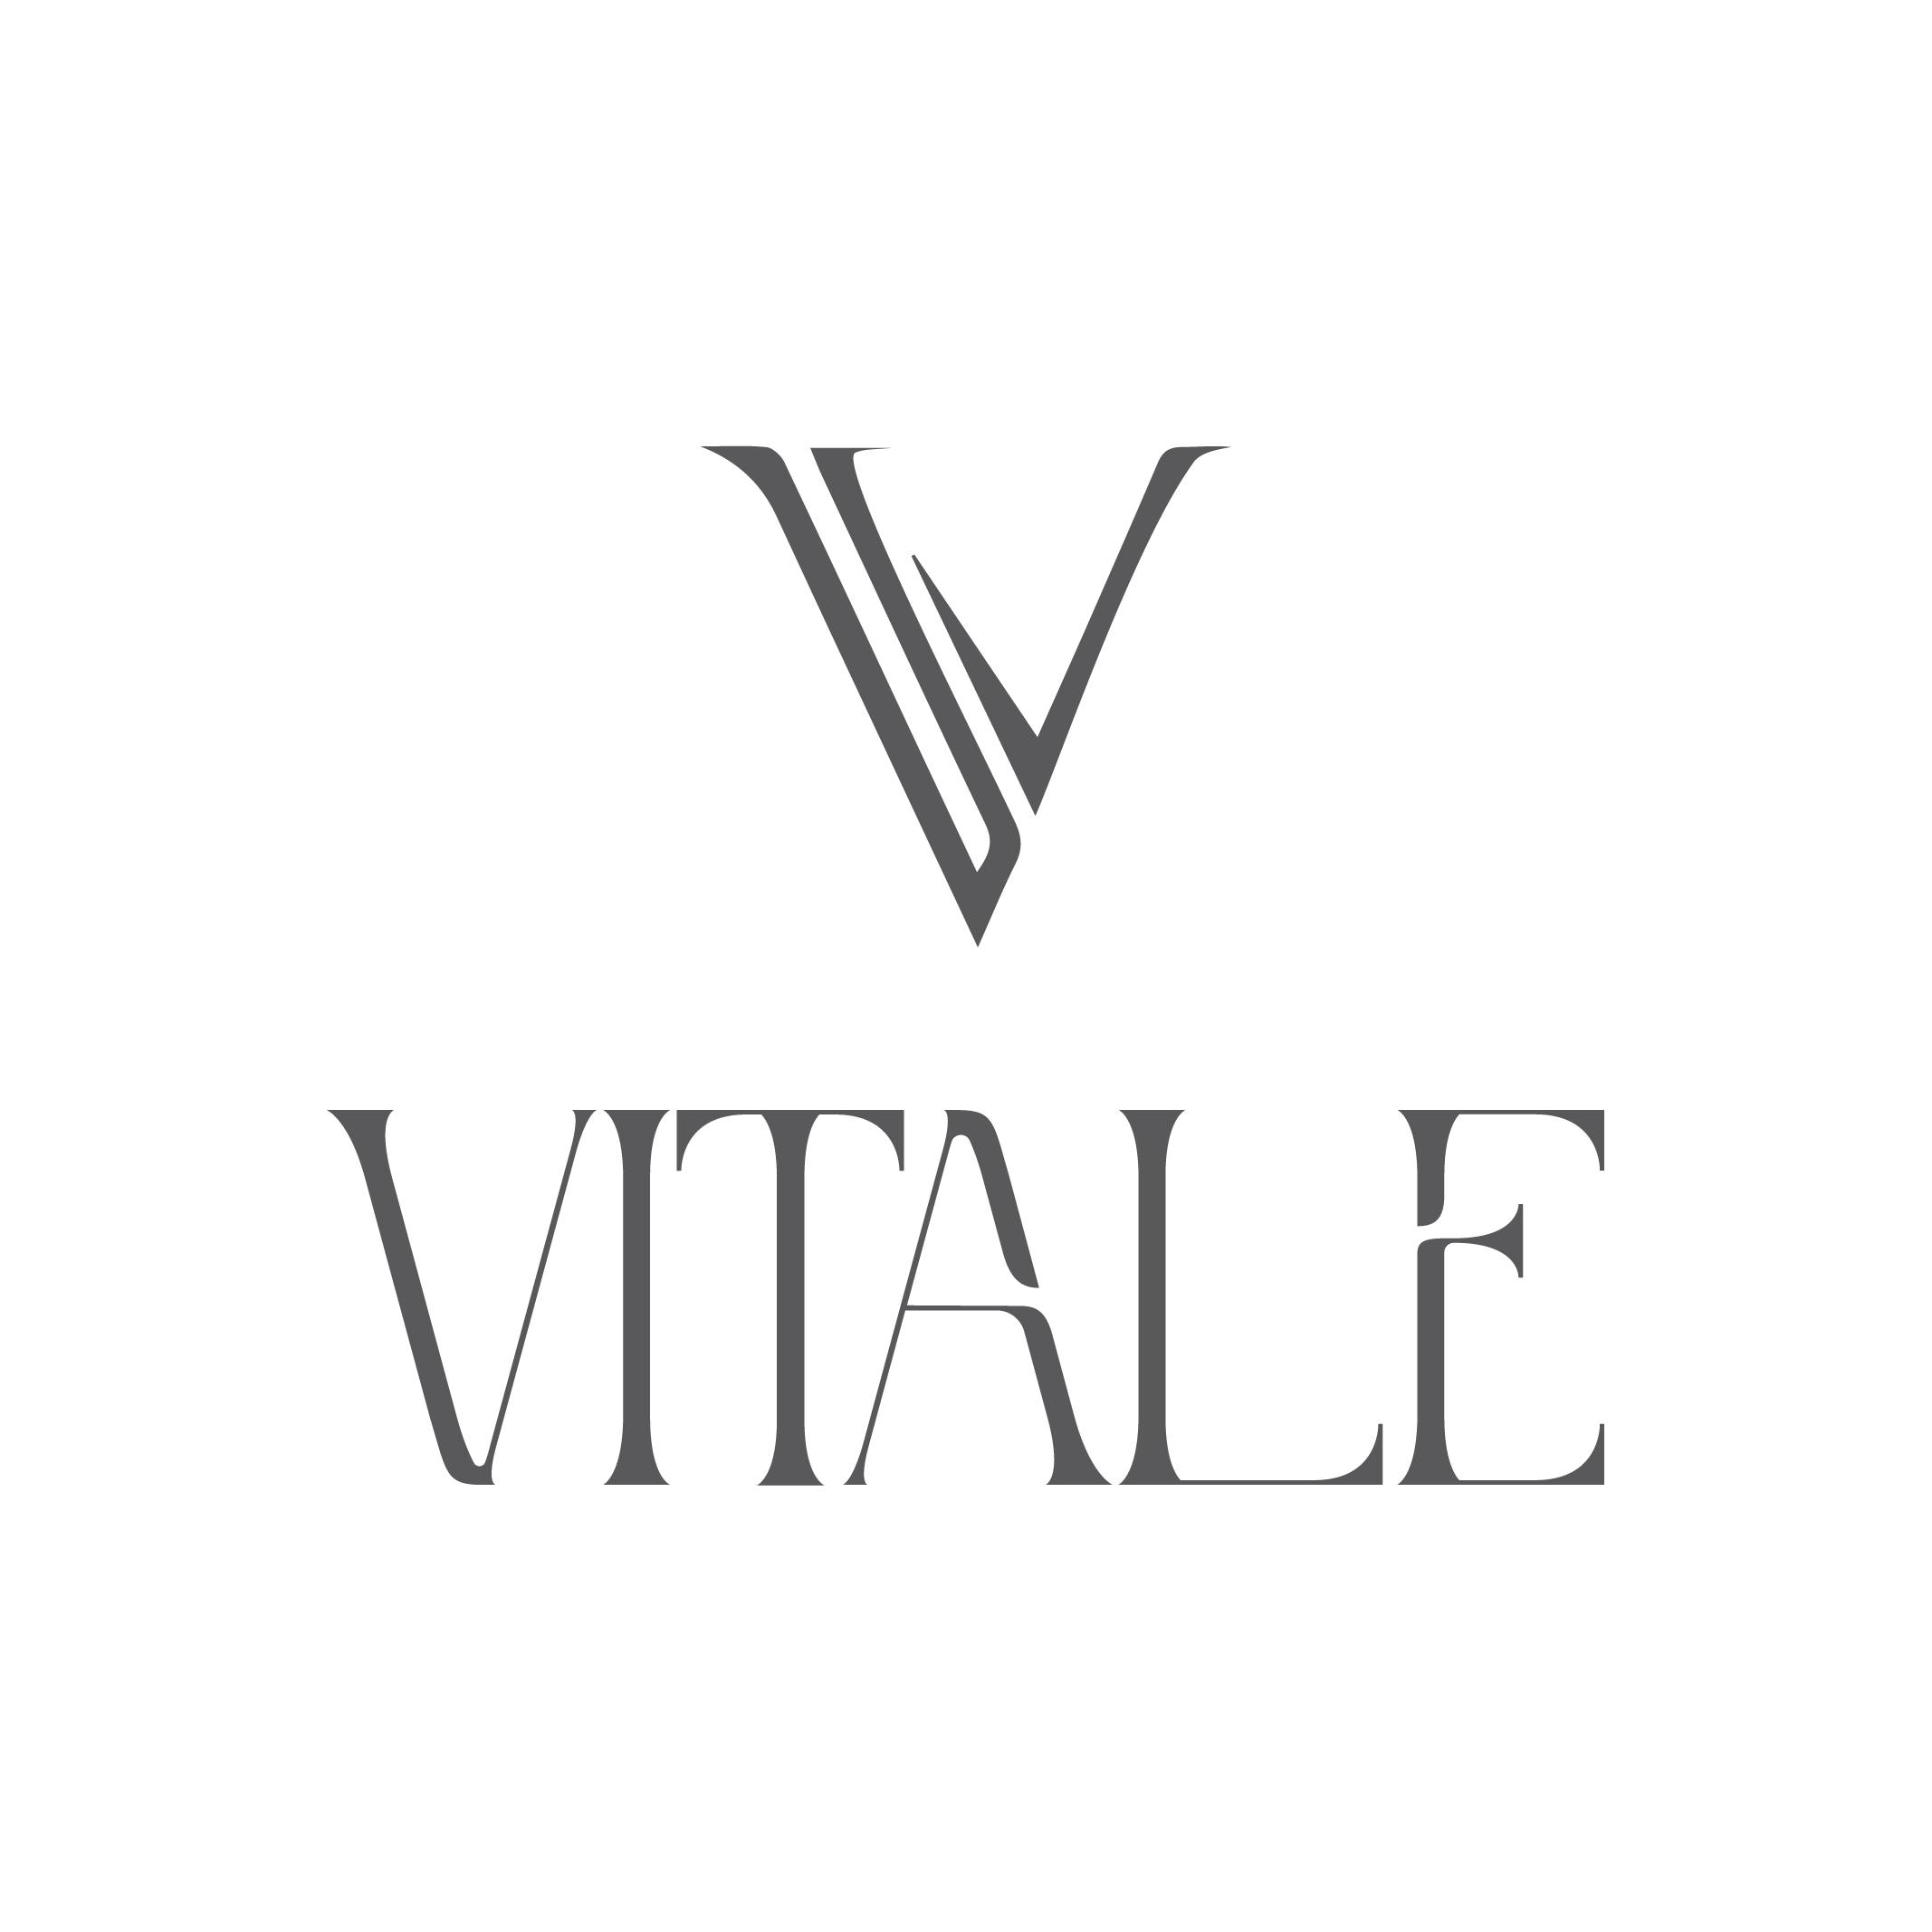 Vitale Group showroom - Official Website